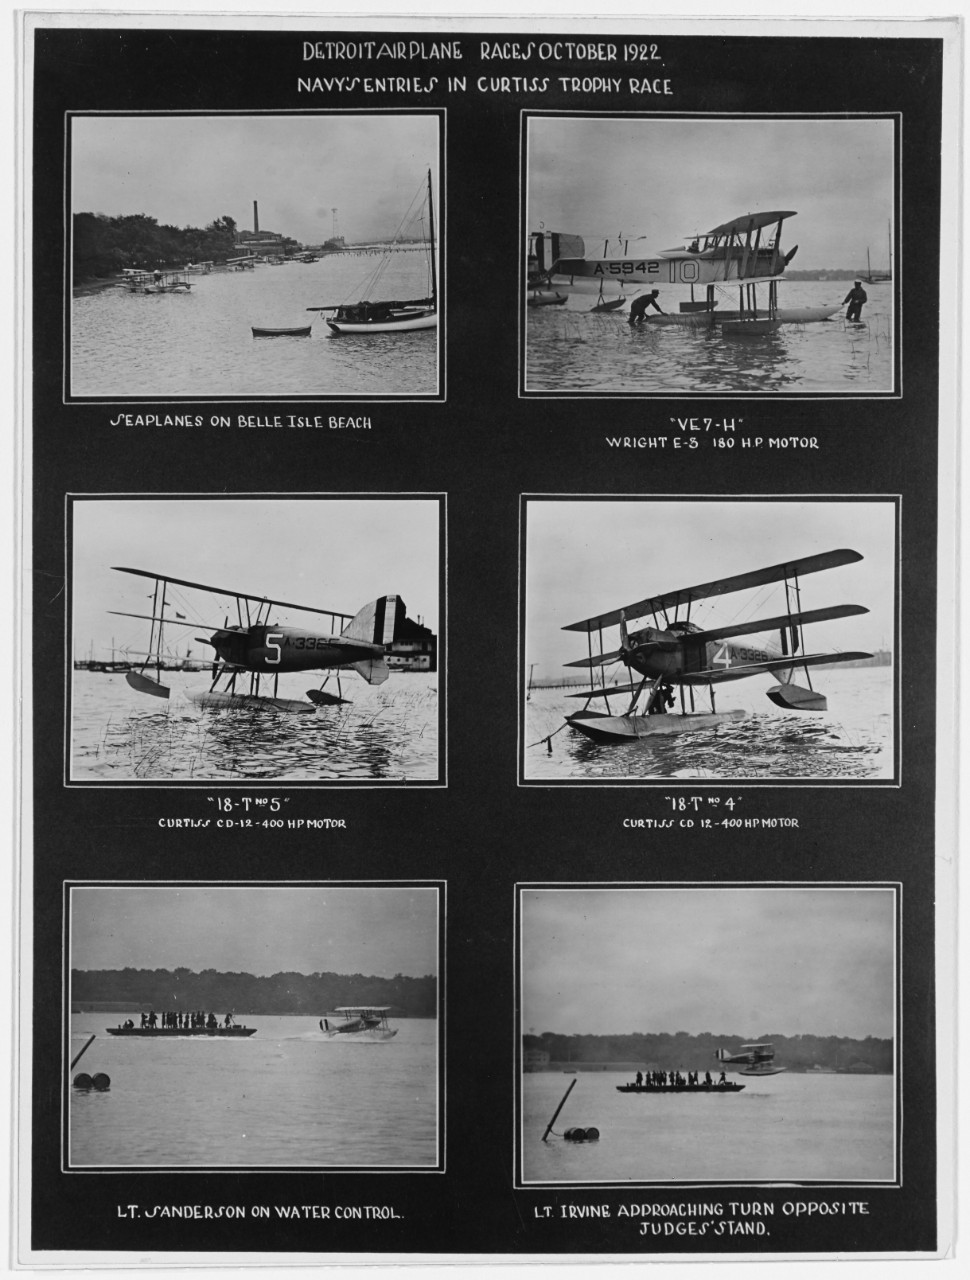 Detroit Air Races, October 1922. 